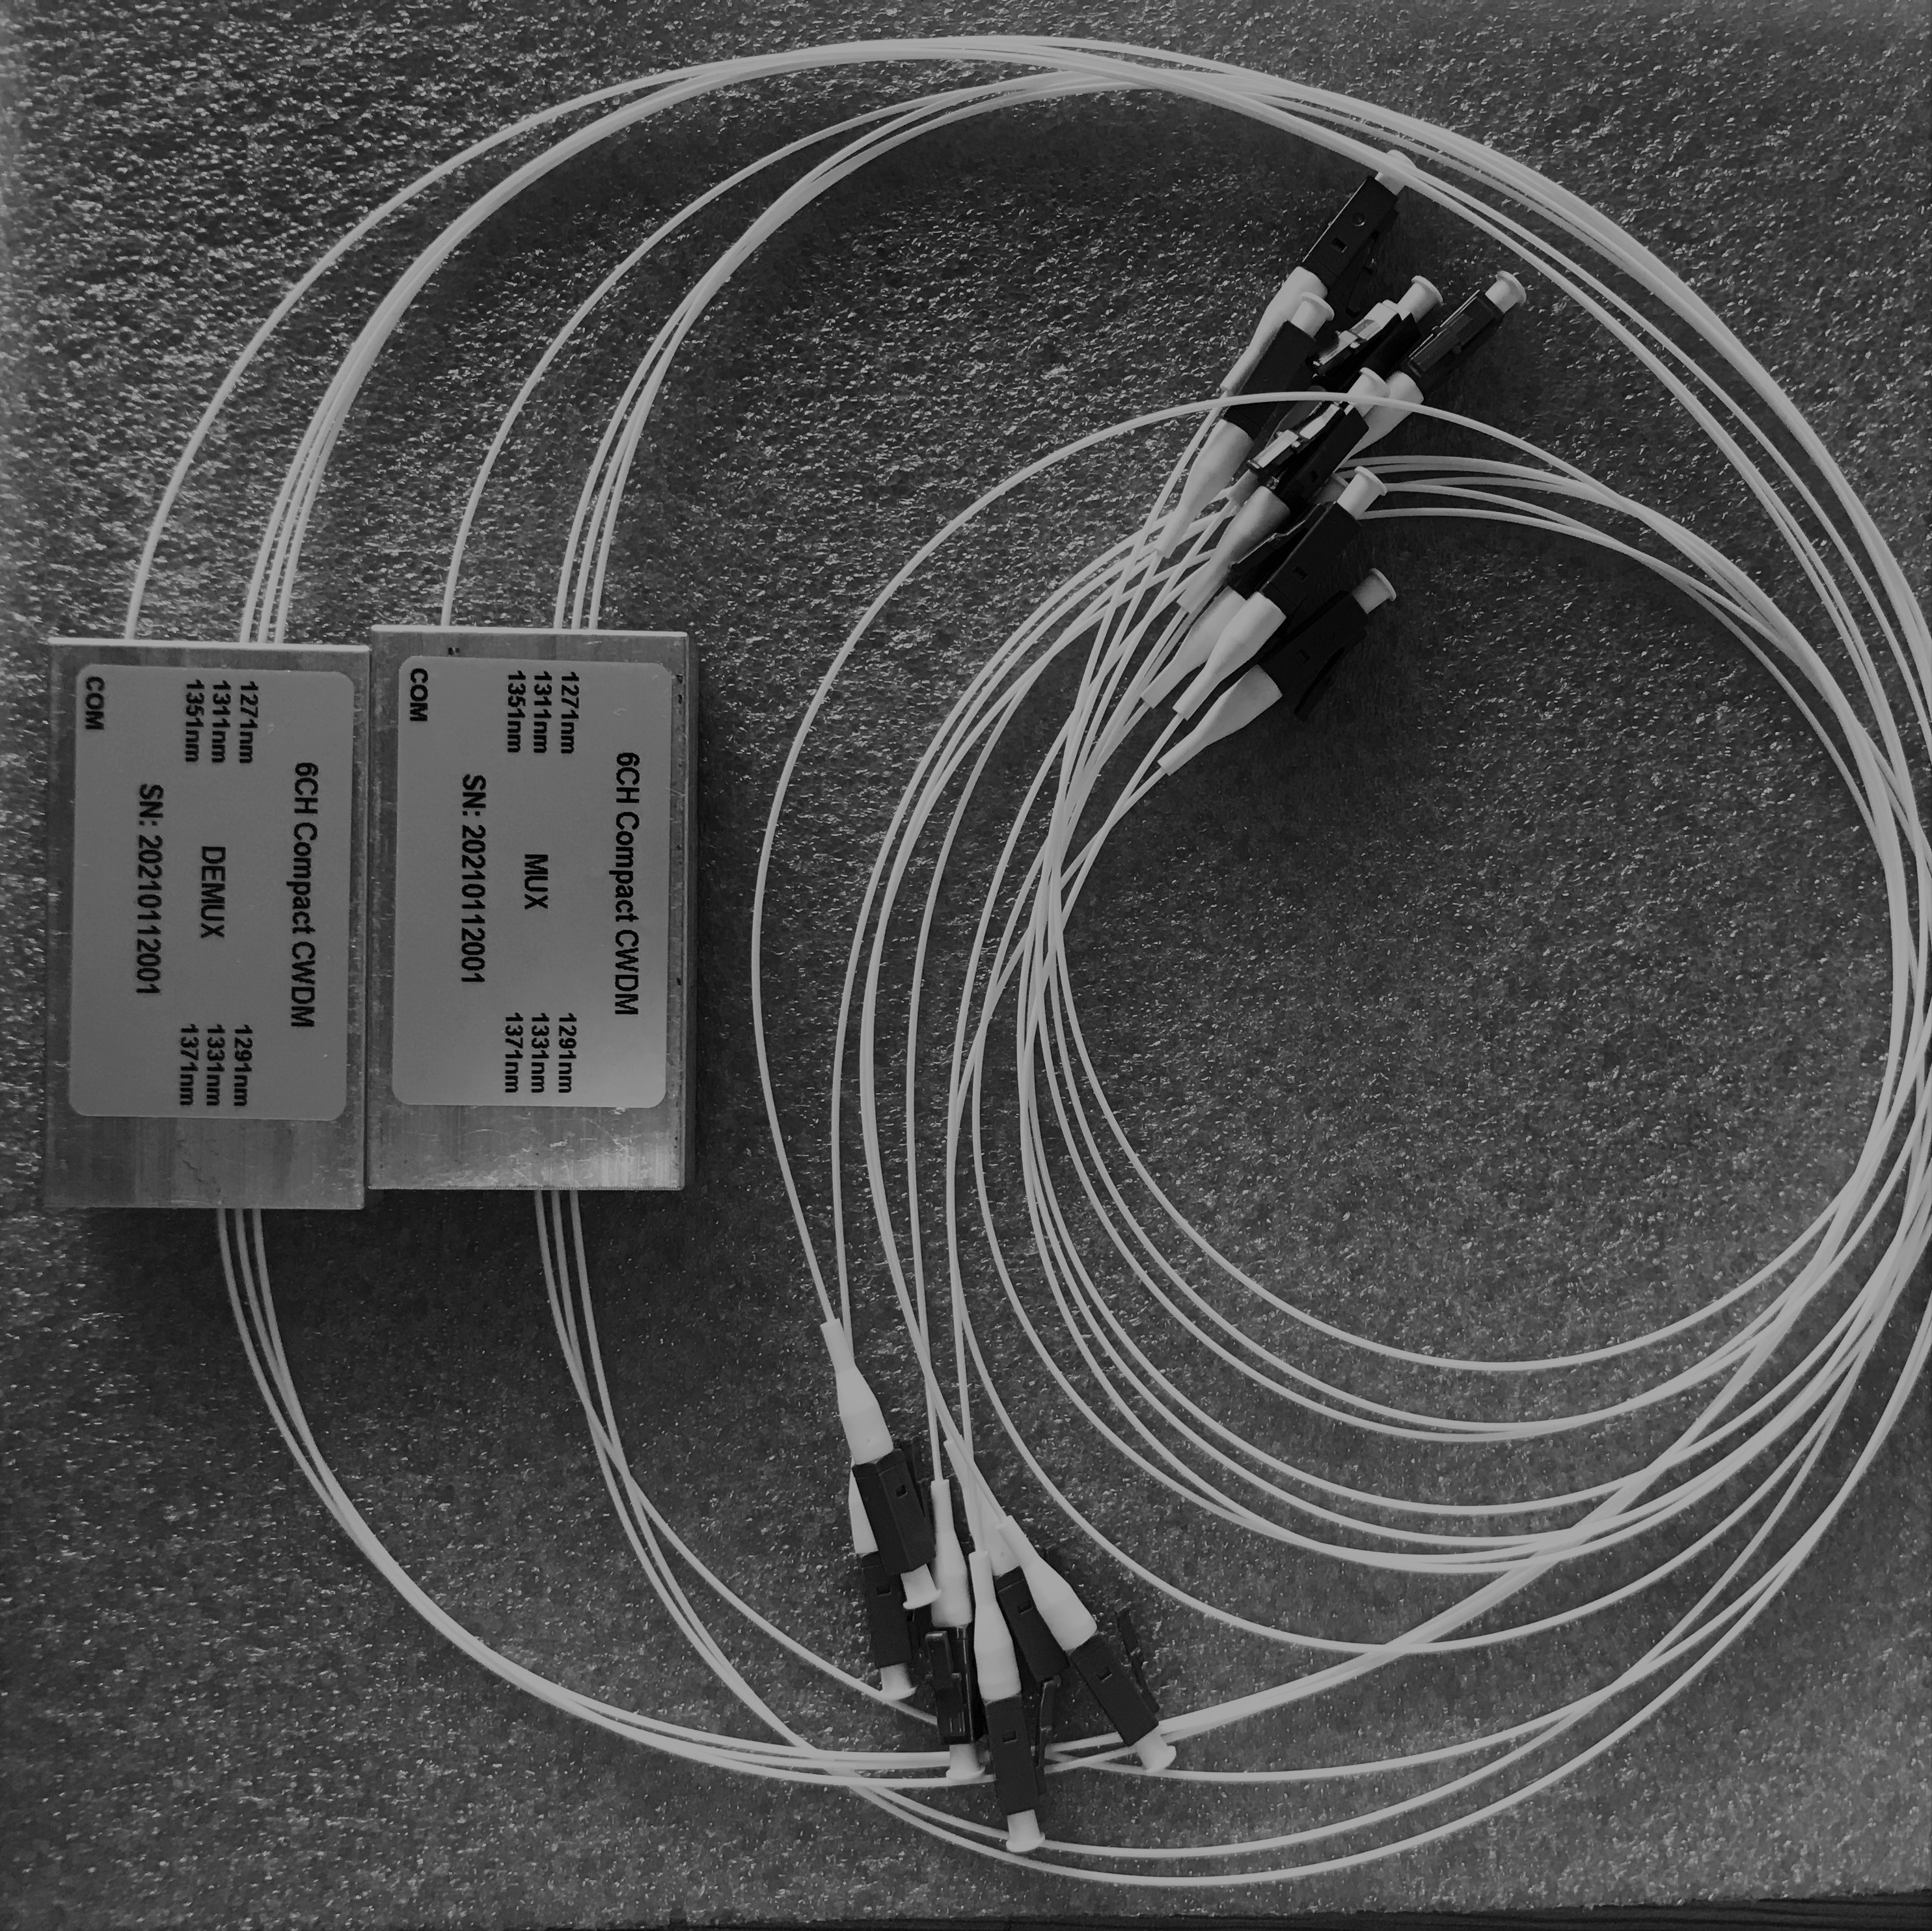 4 Channels 1270-1330nm or ITU,Bilateral fiber outlet, High Density,0.8 dB Typica